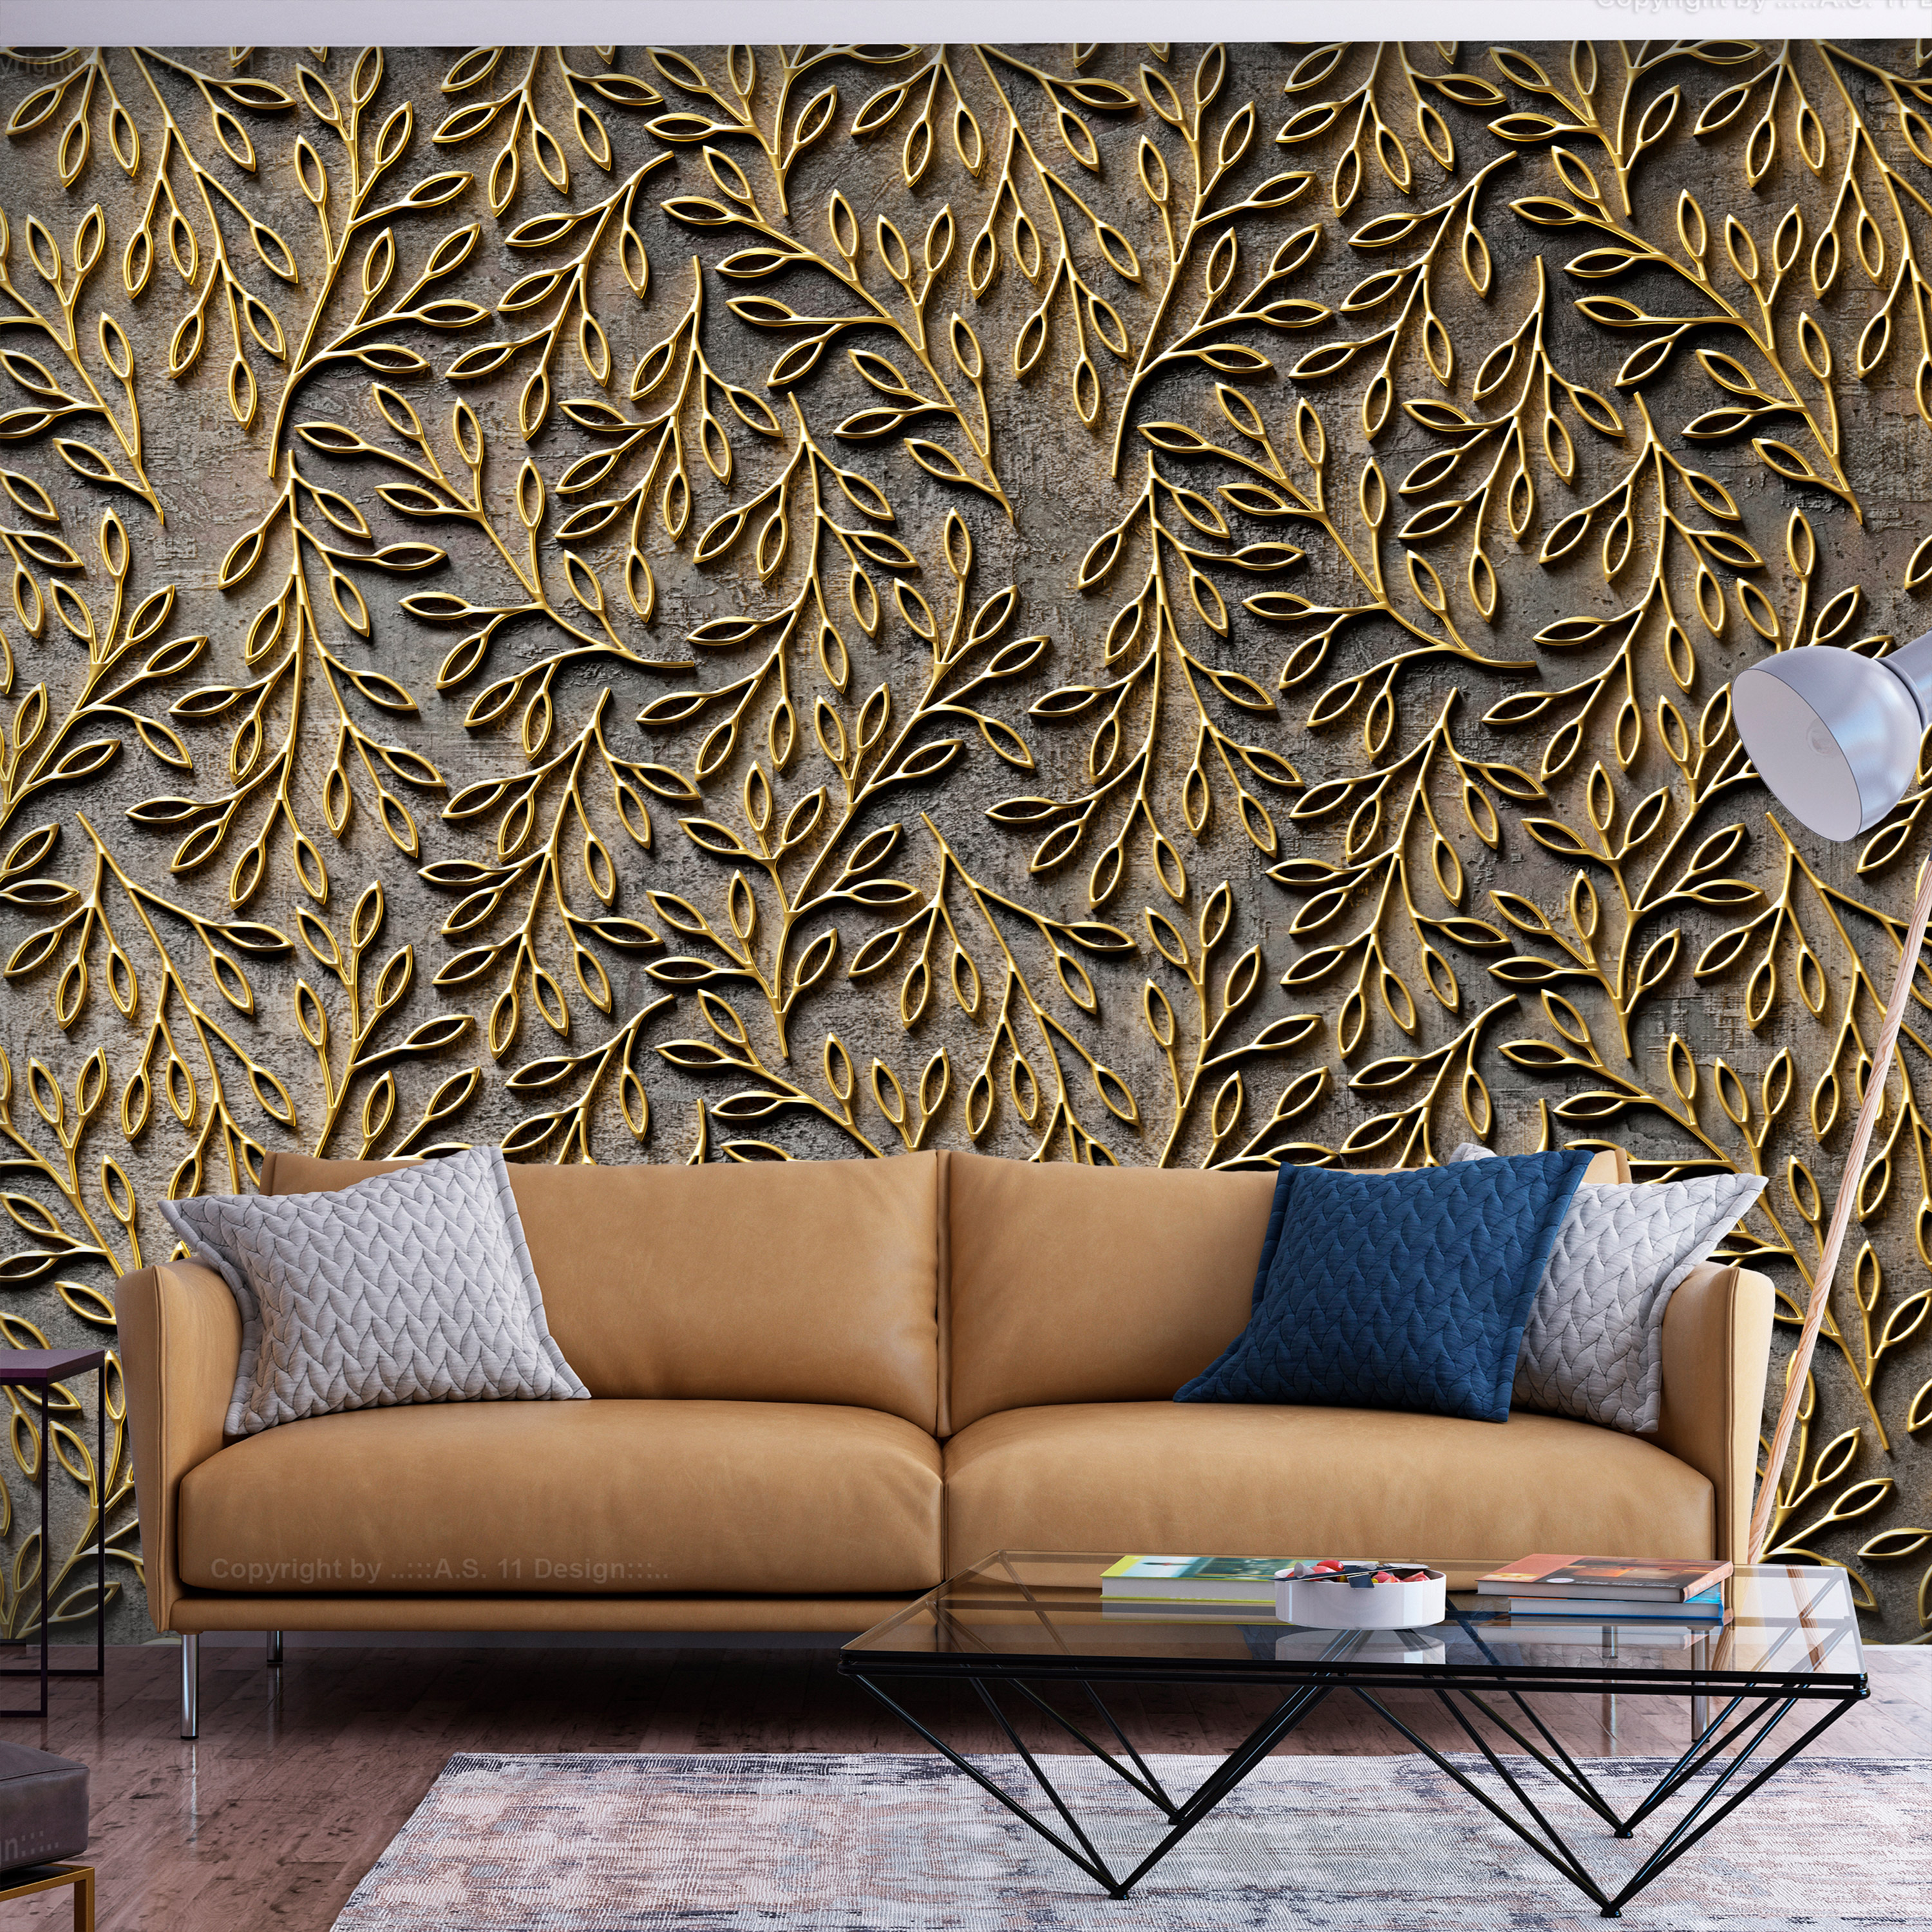 Self-adhesive Wallpaper - Golden Decorations - 196x140